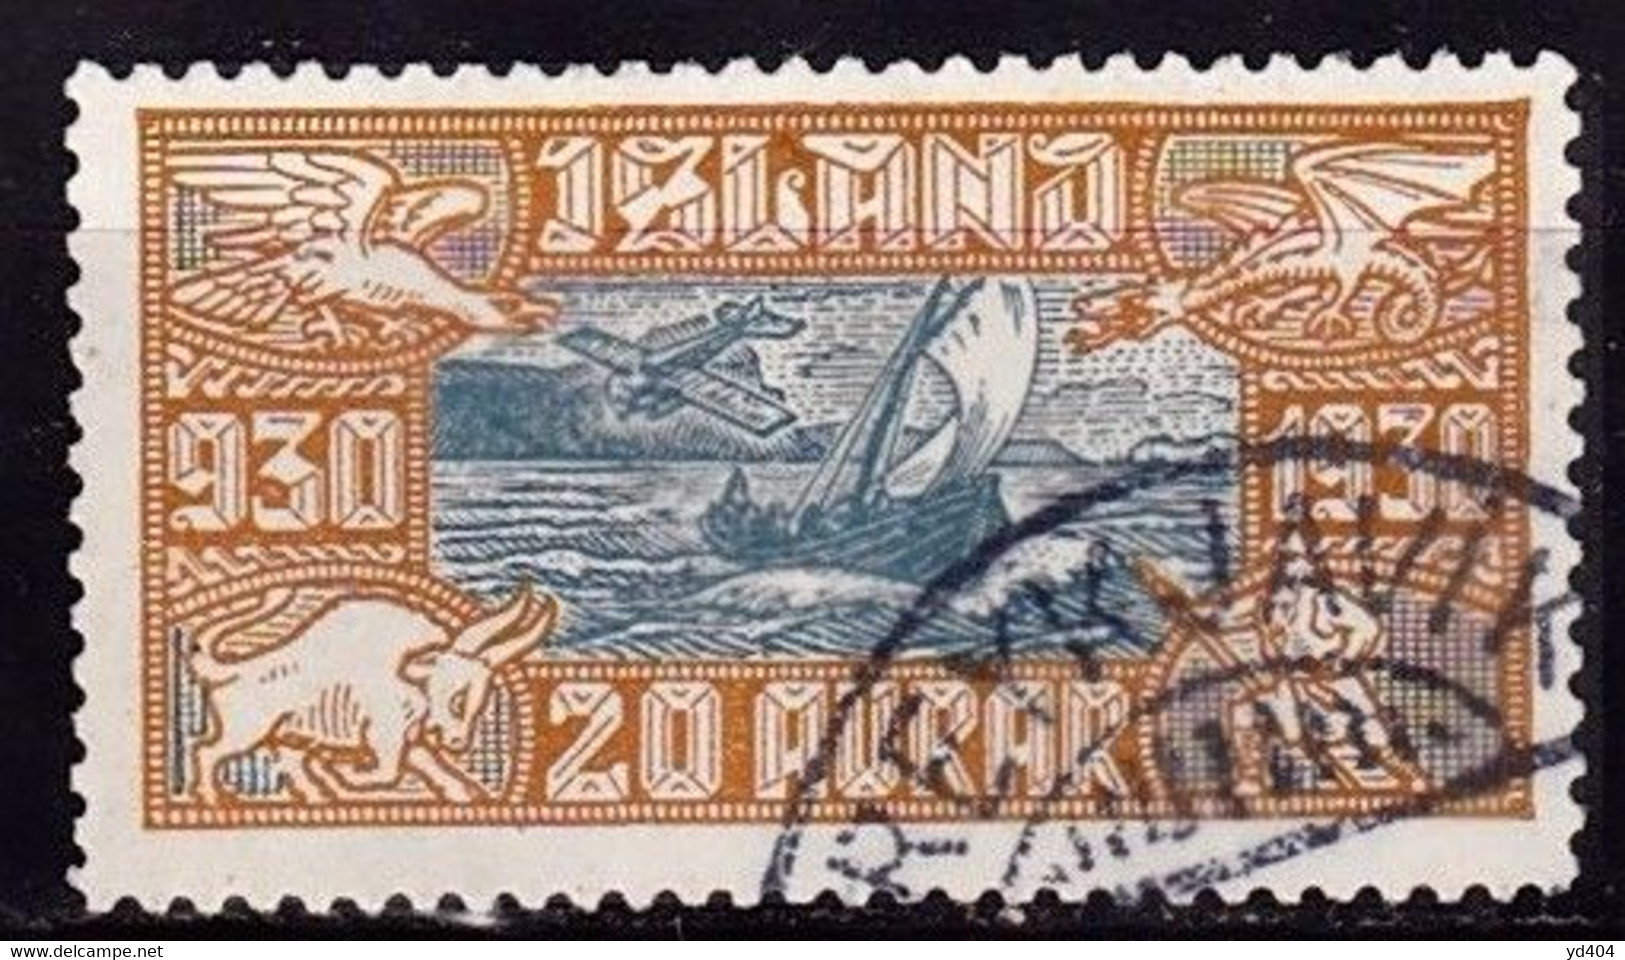 IS313 – ISLANDE – ICELAND – 1930 – PARLIAMENT MILLENARY – SG # 175 USED 59 € - Poste Aérienne